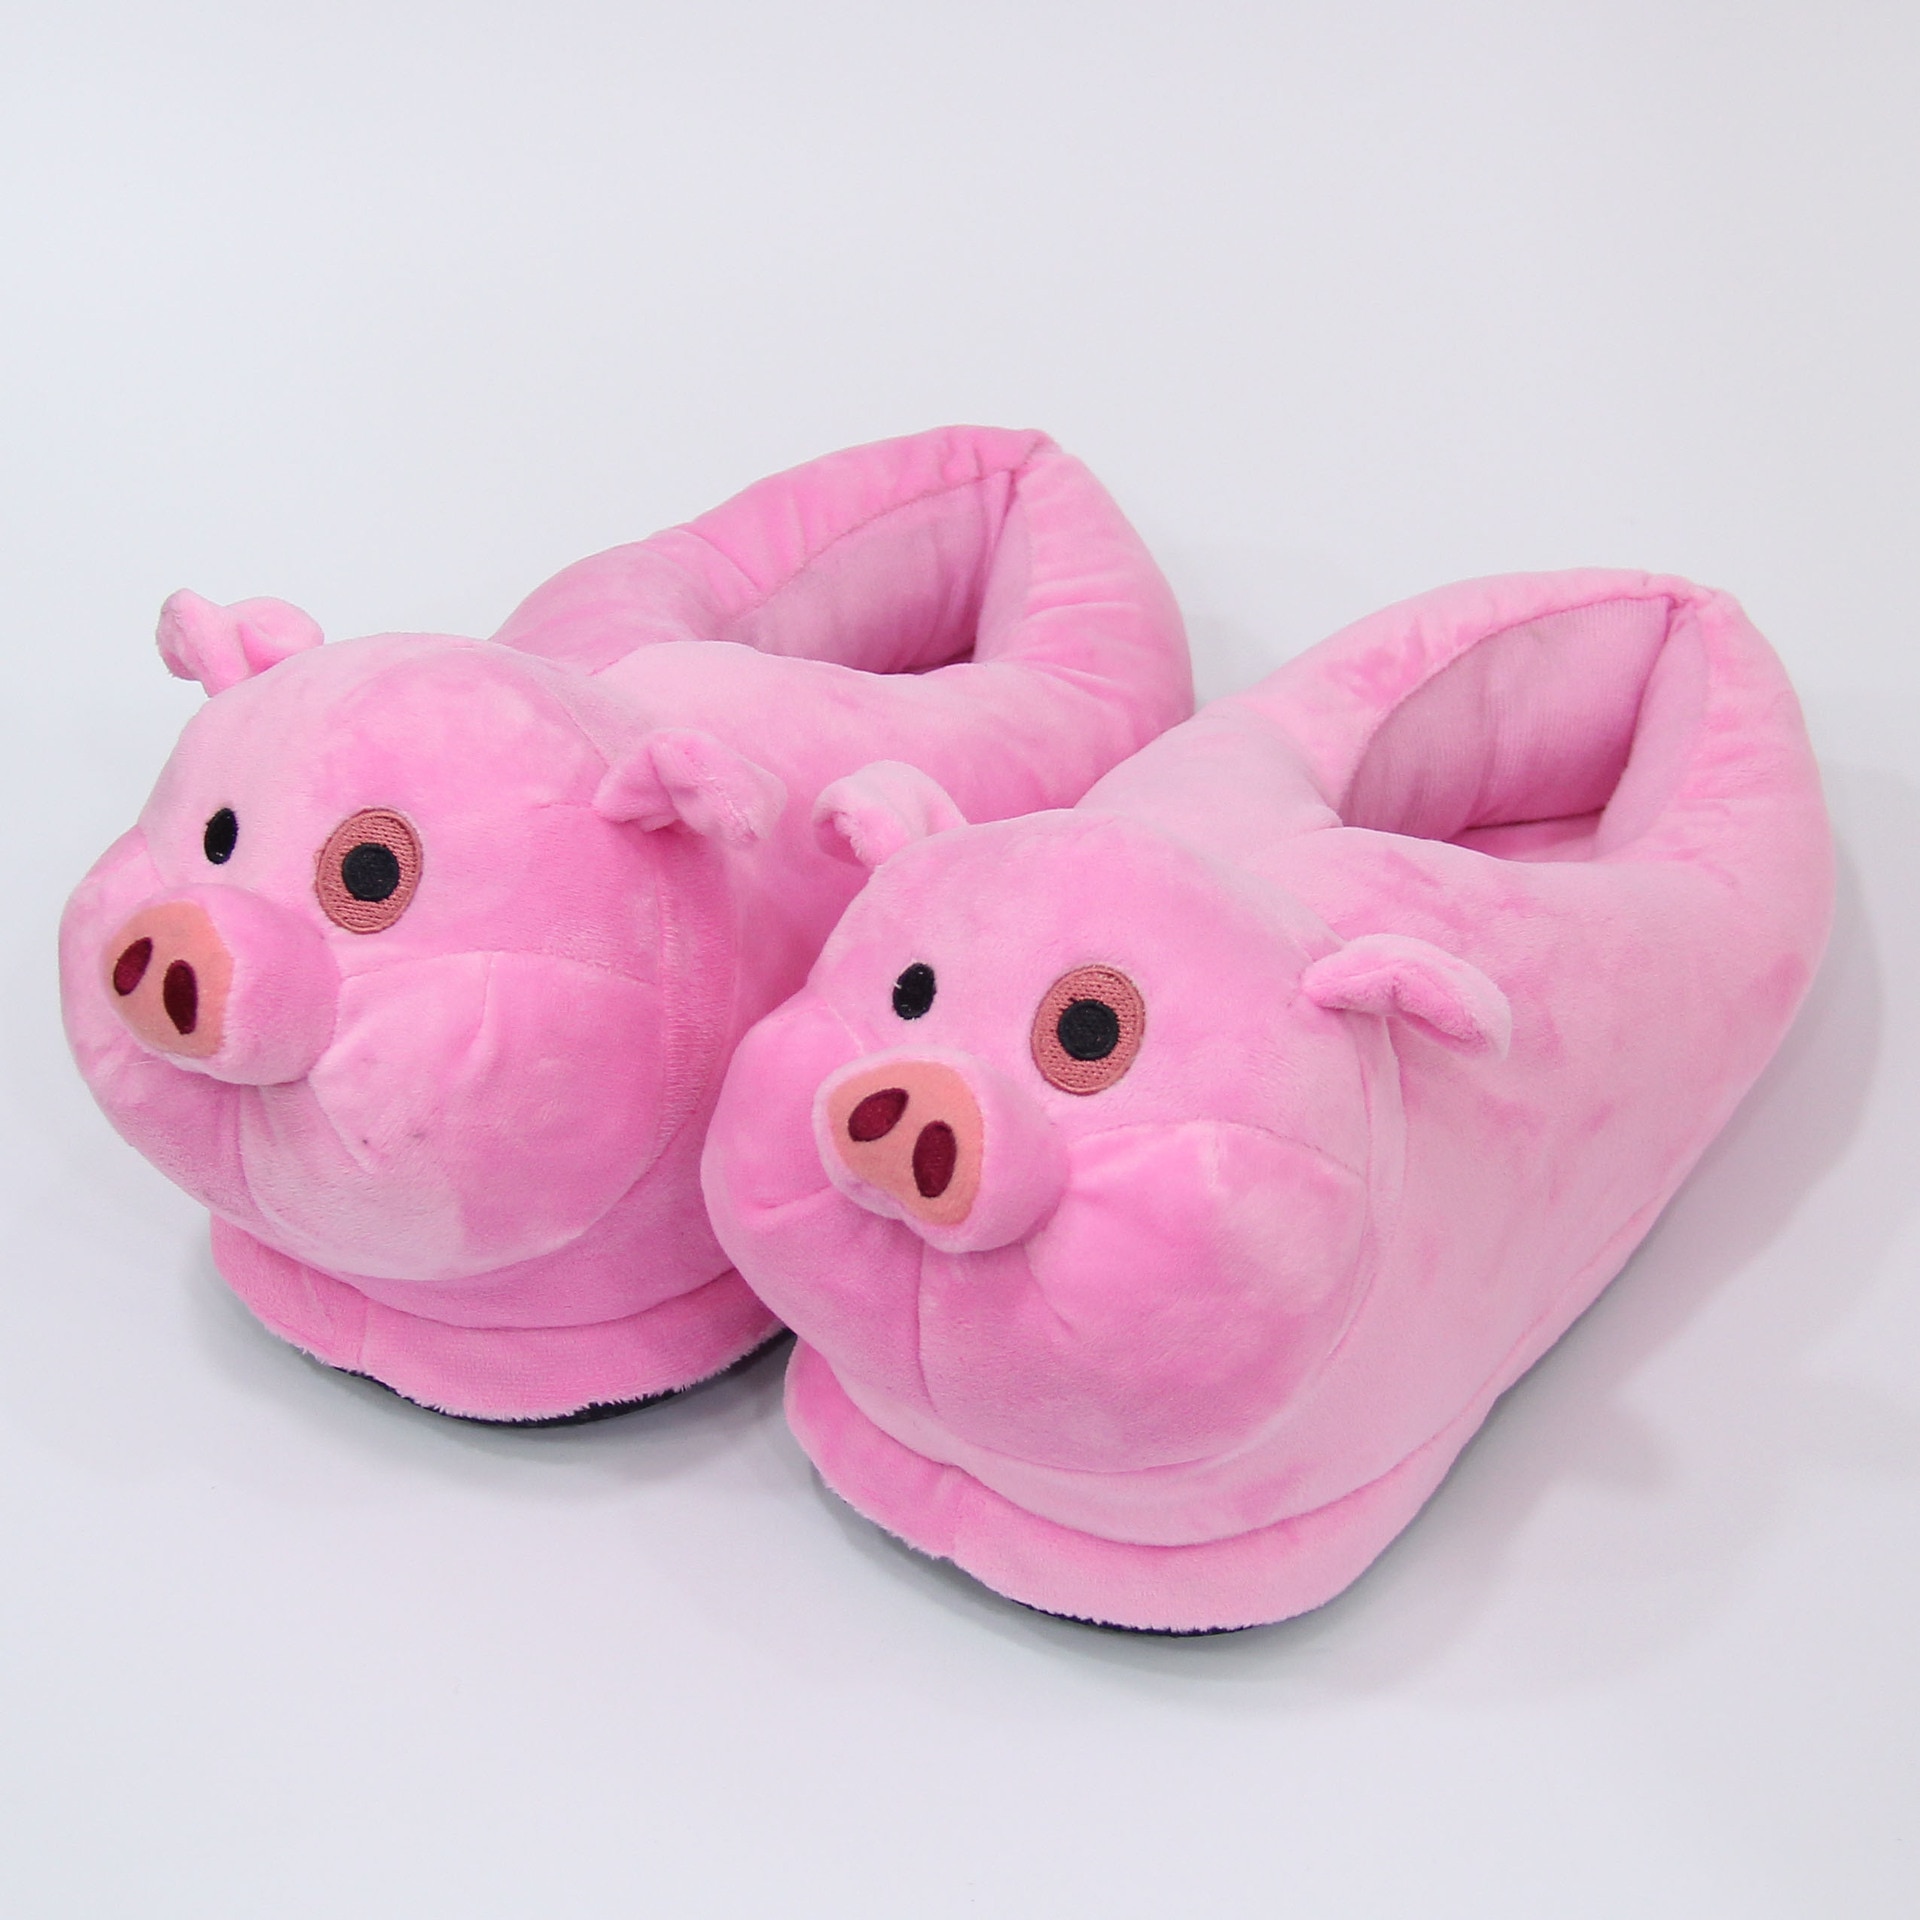 Winter warm Indoor floor bedroom Cotton Pink Pig slippers cartoon cute plush Keji slippers home slip cotton pad shoes